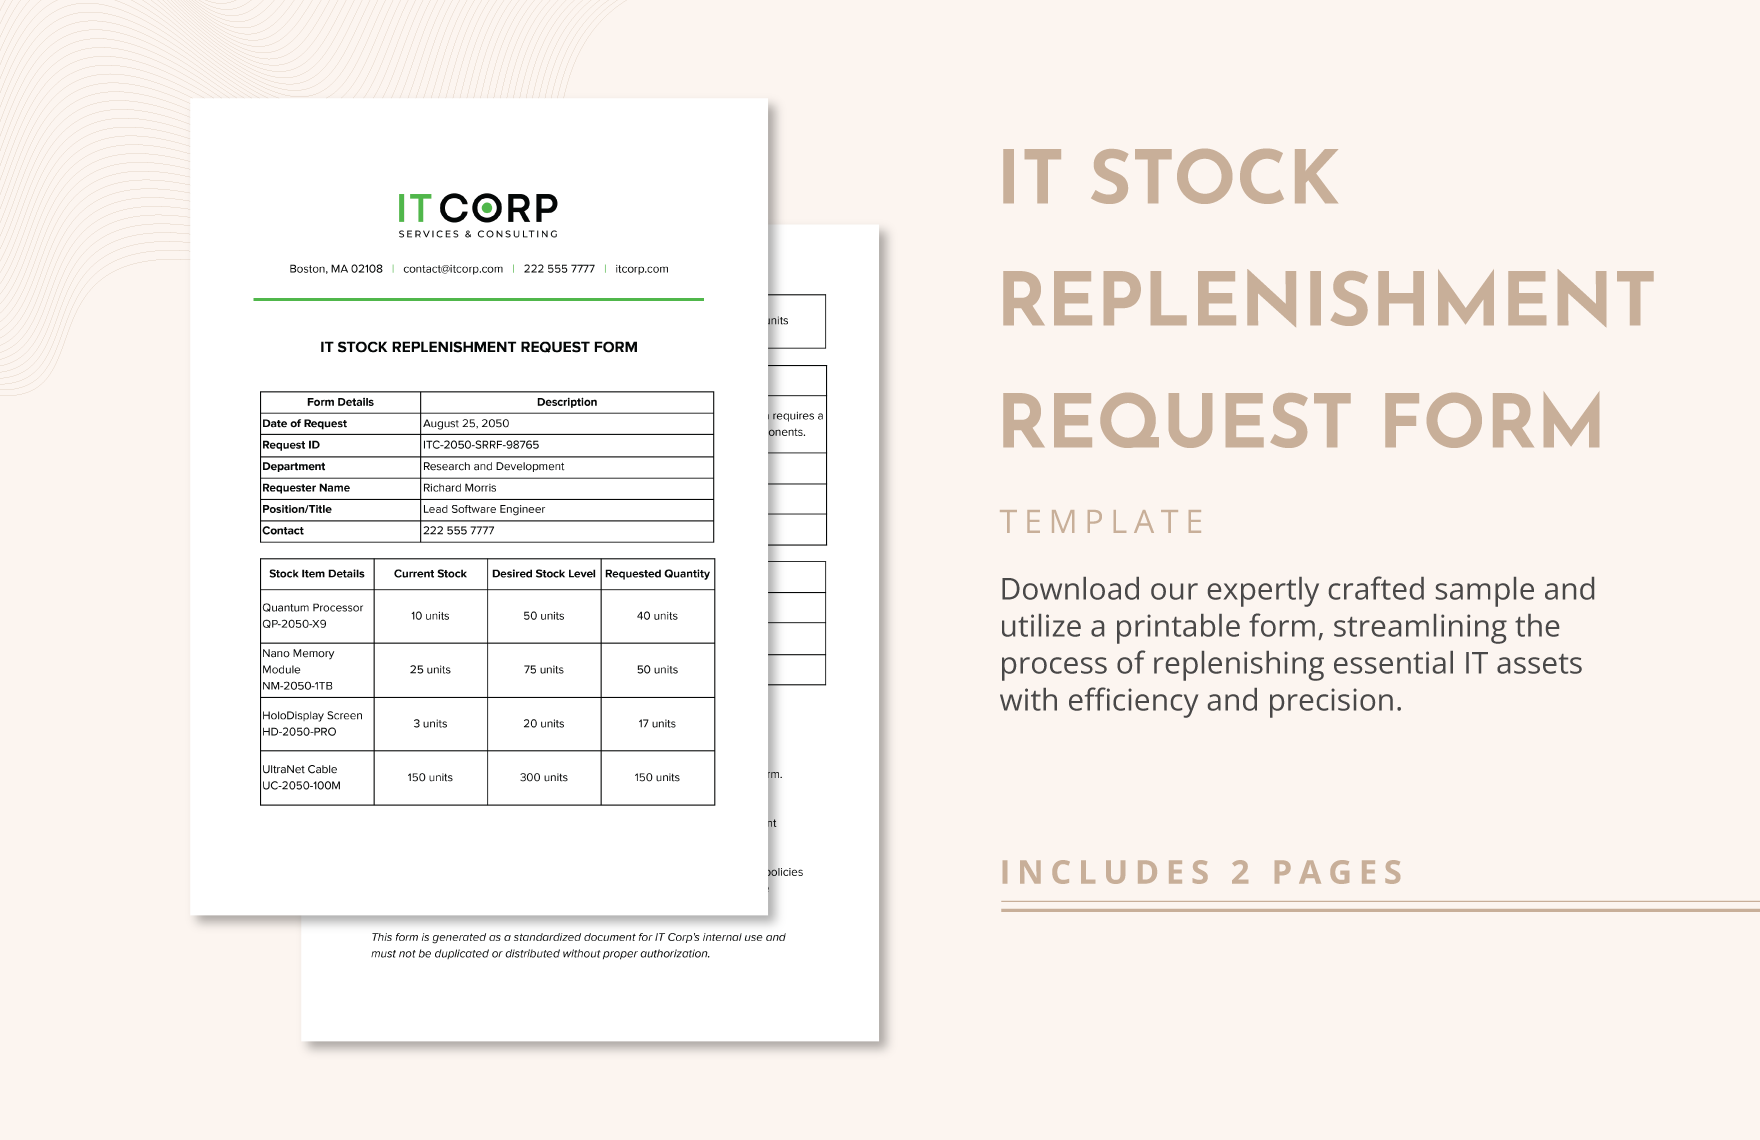 IT Stock Replenishment Request Form Template